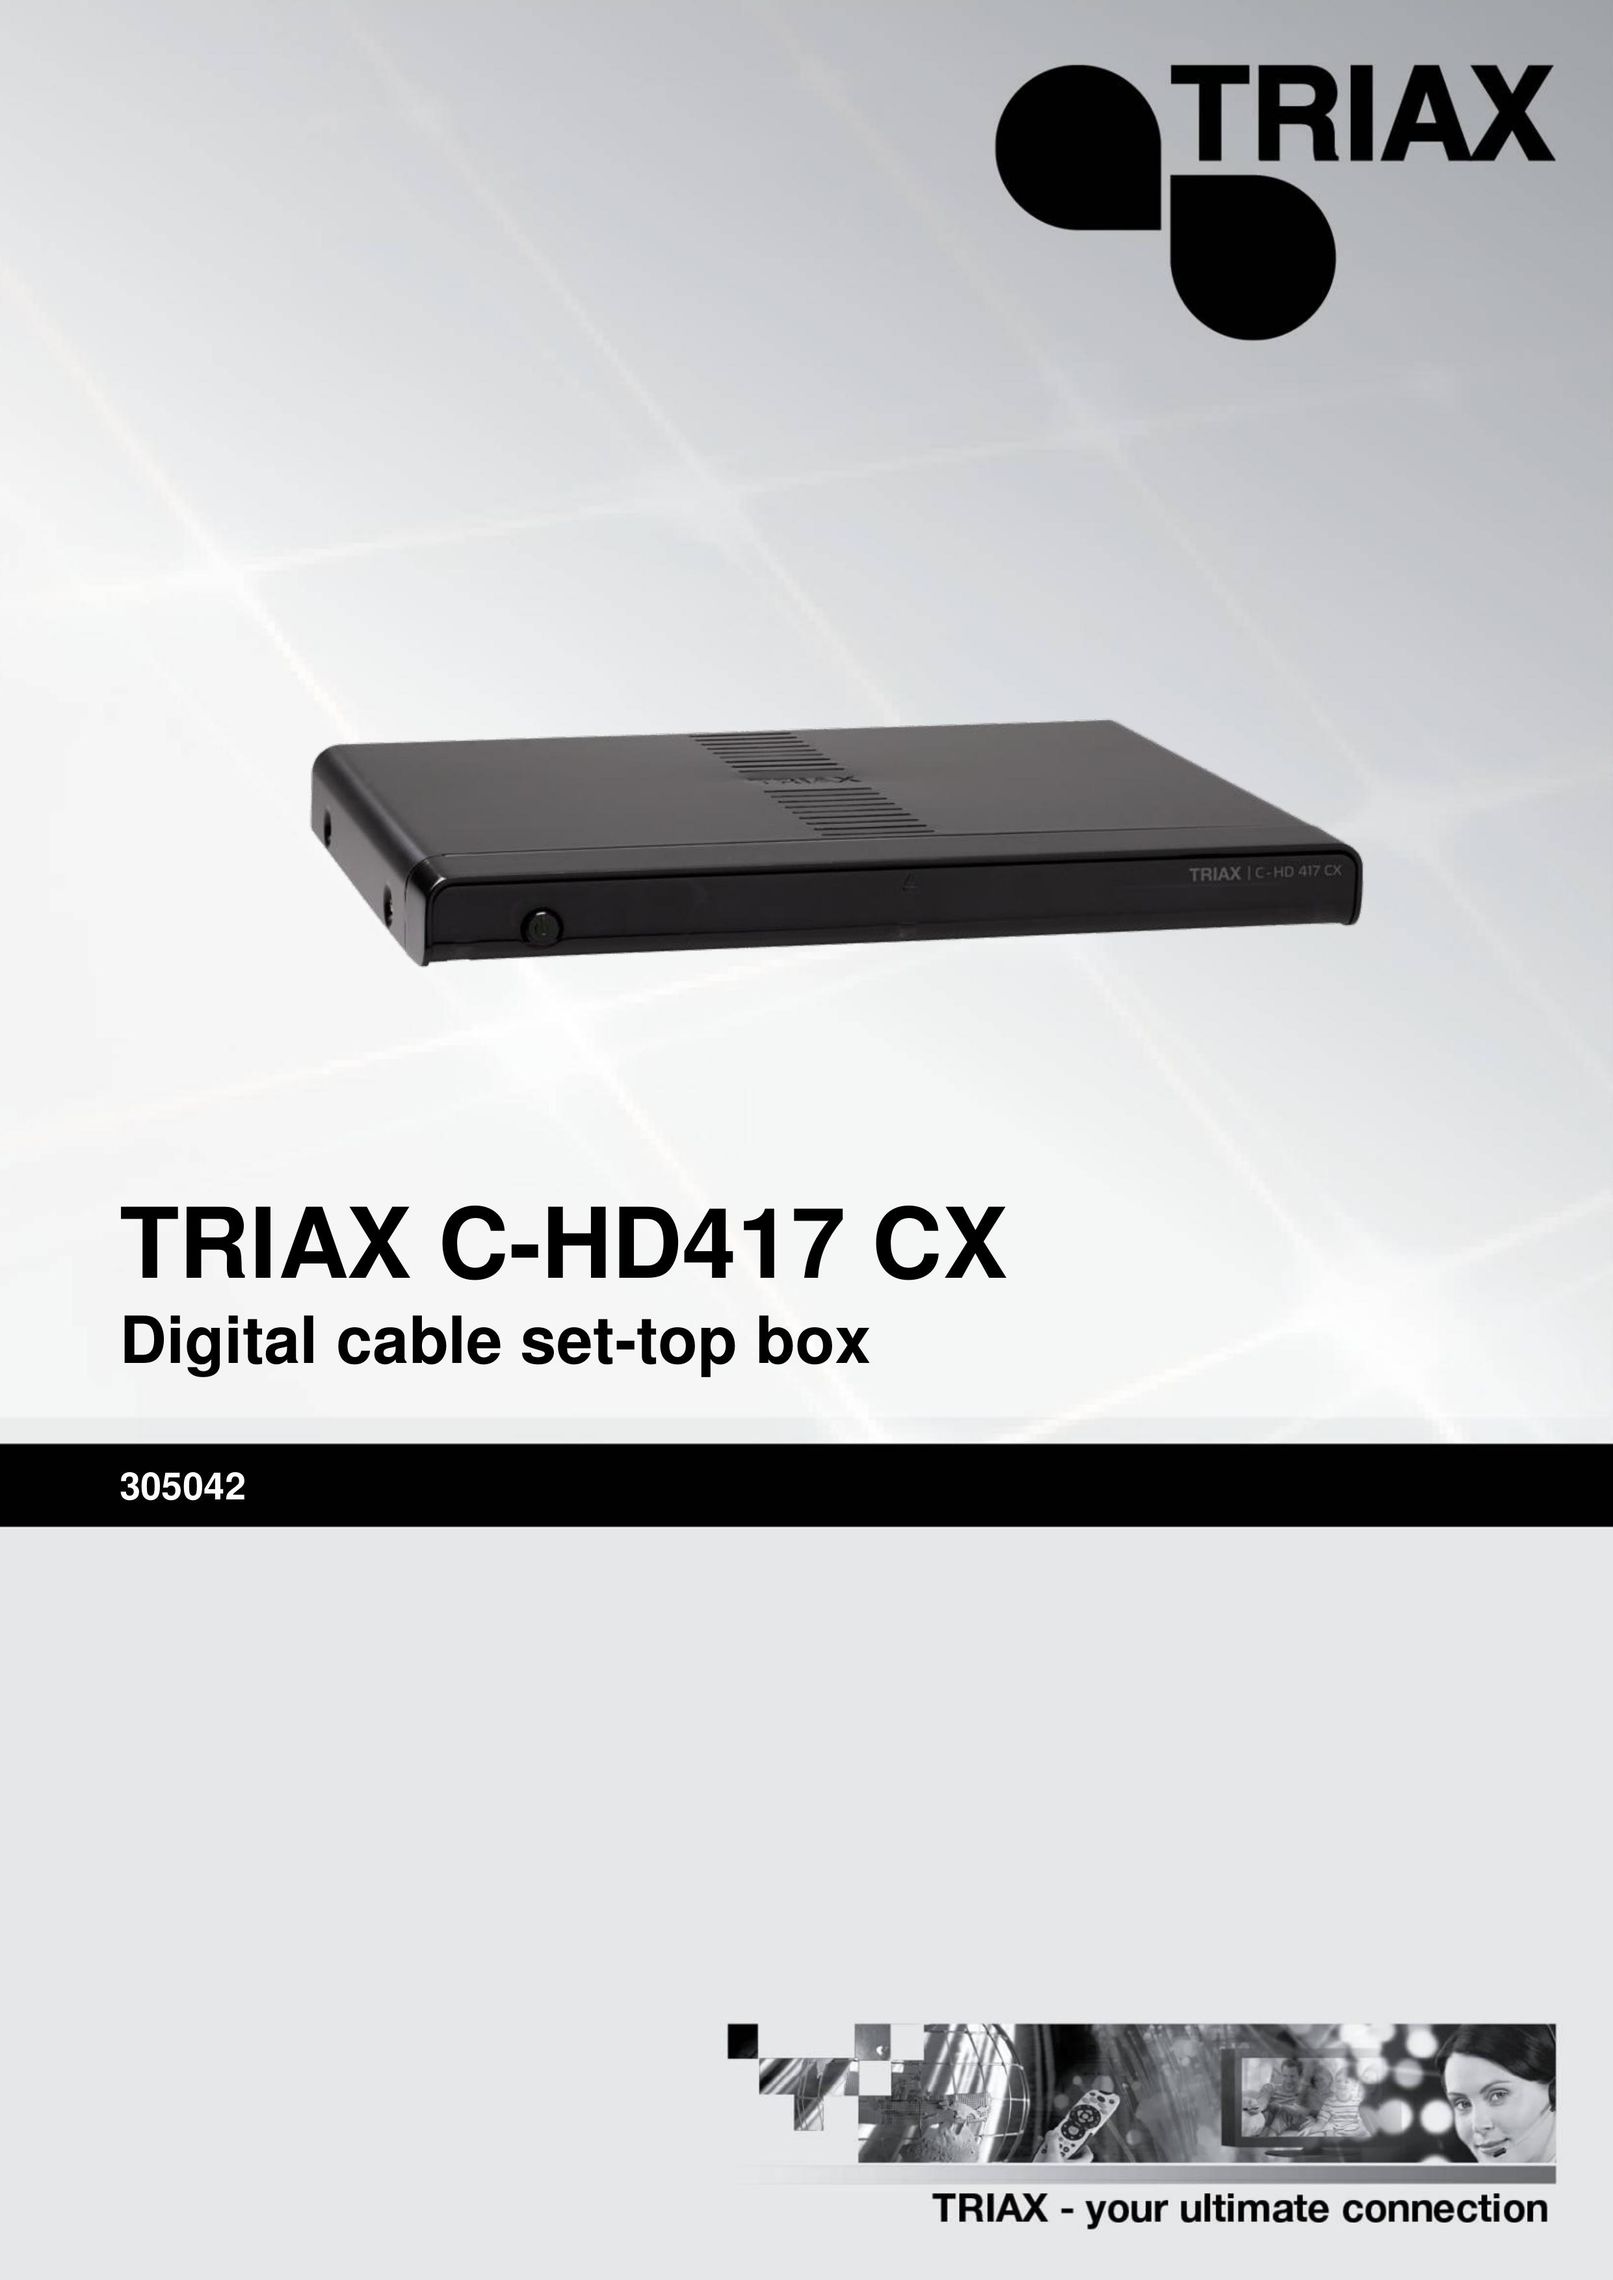 Triax C-HD417 CX Cable Box User Manual